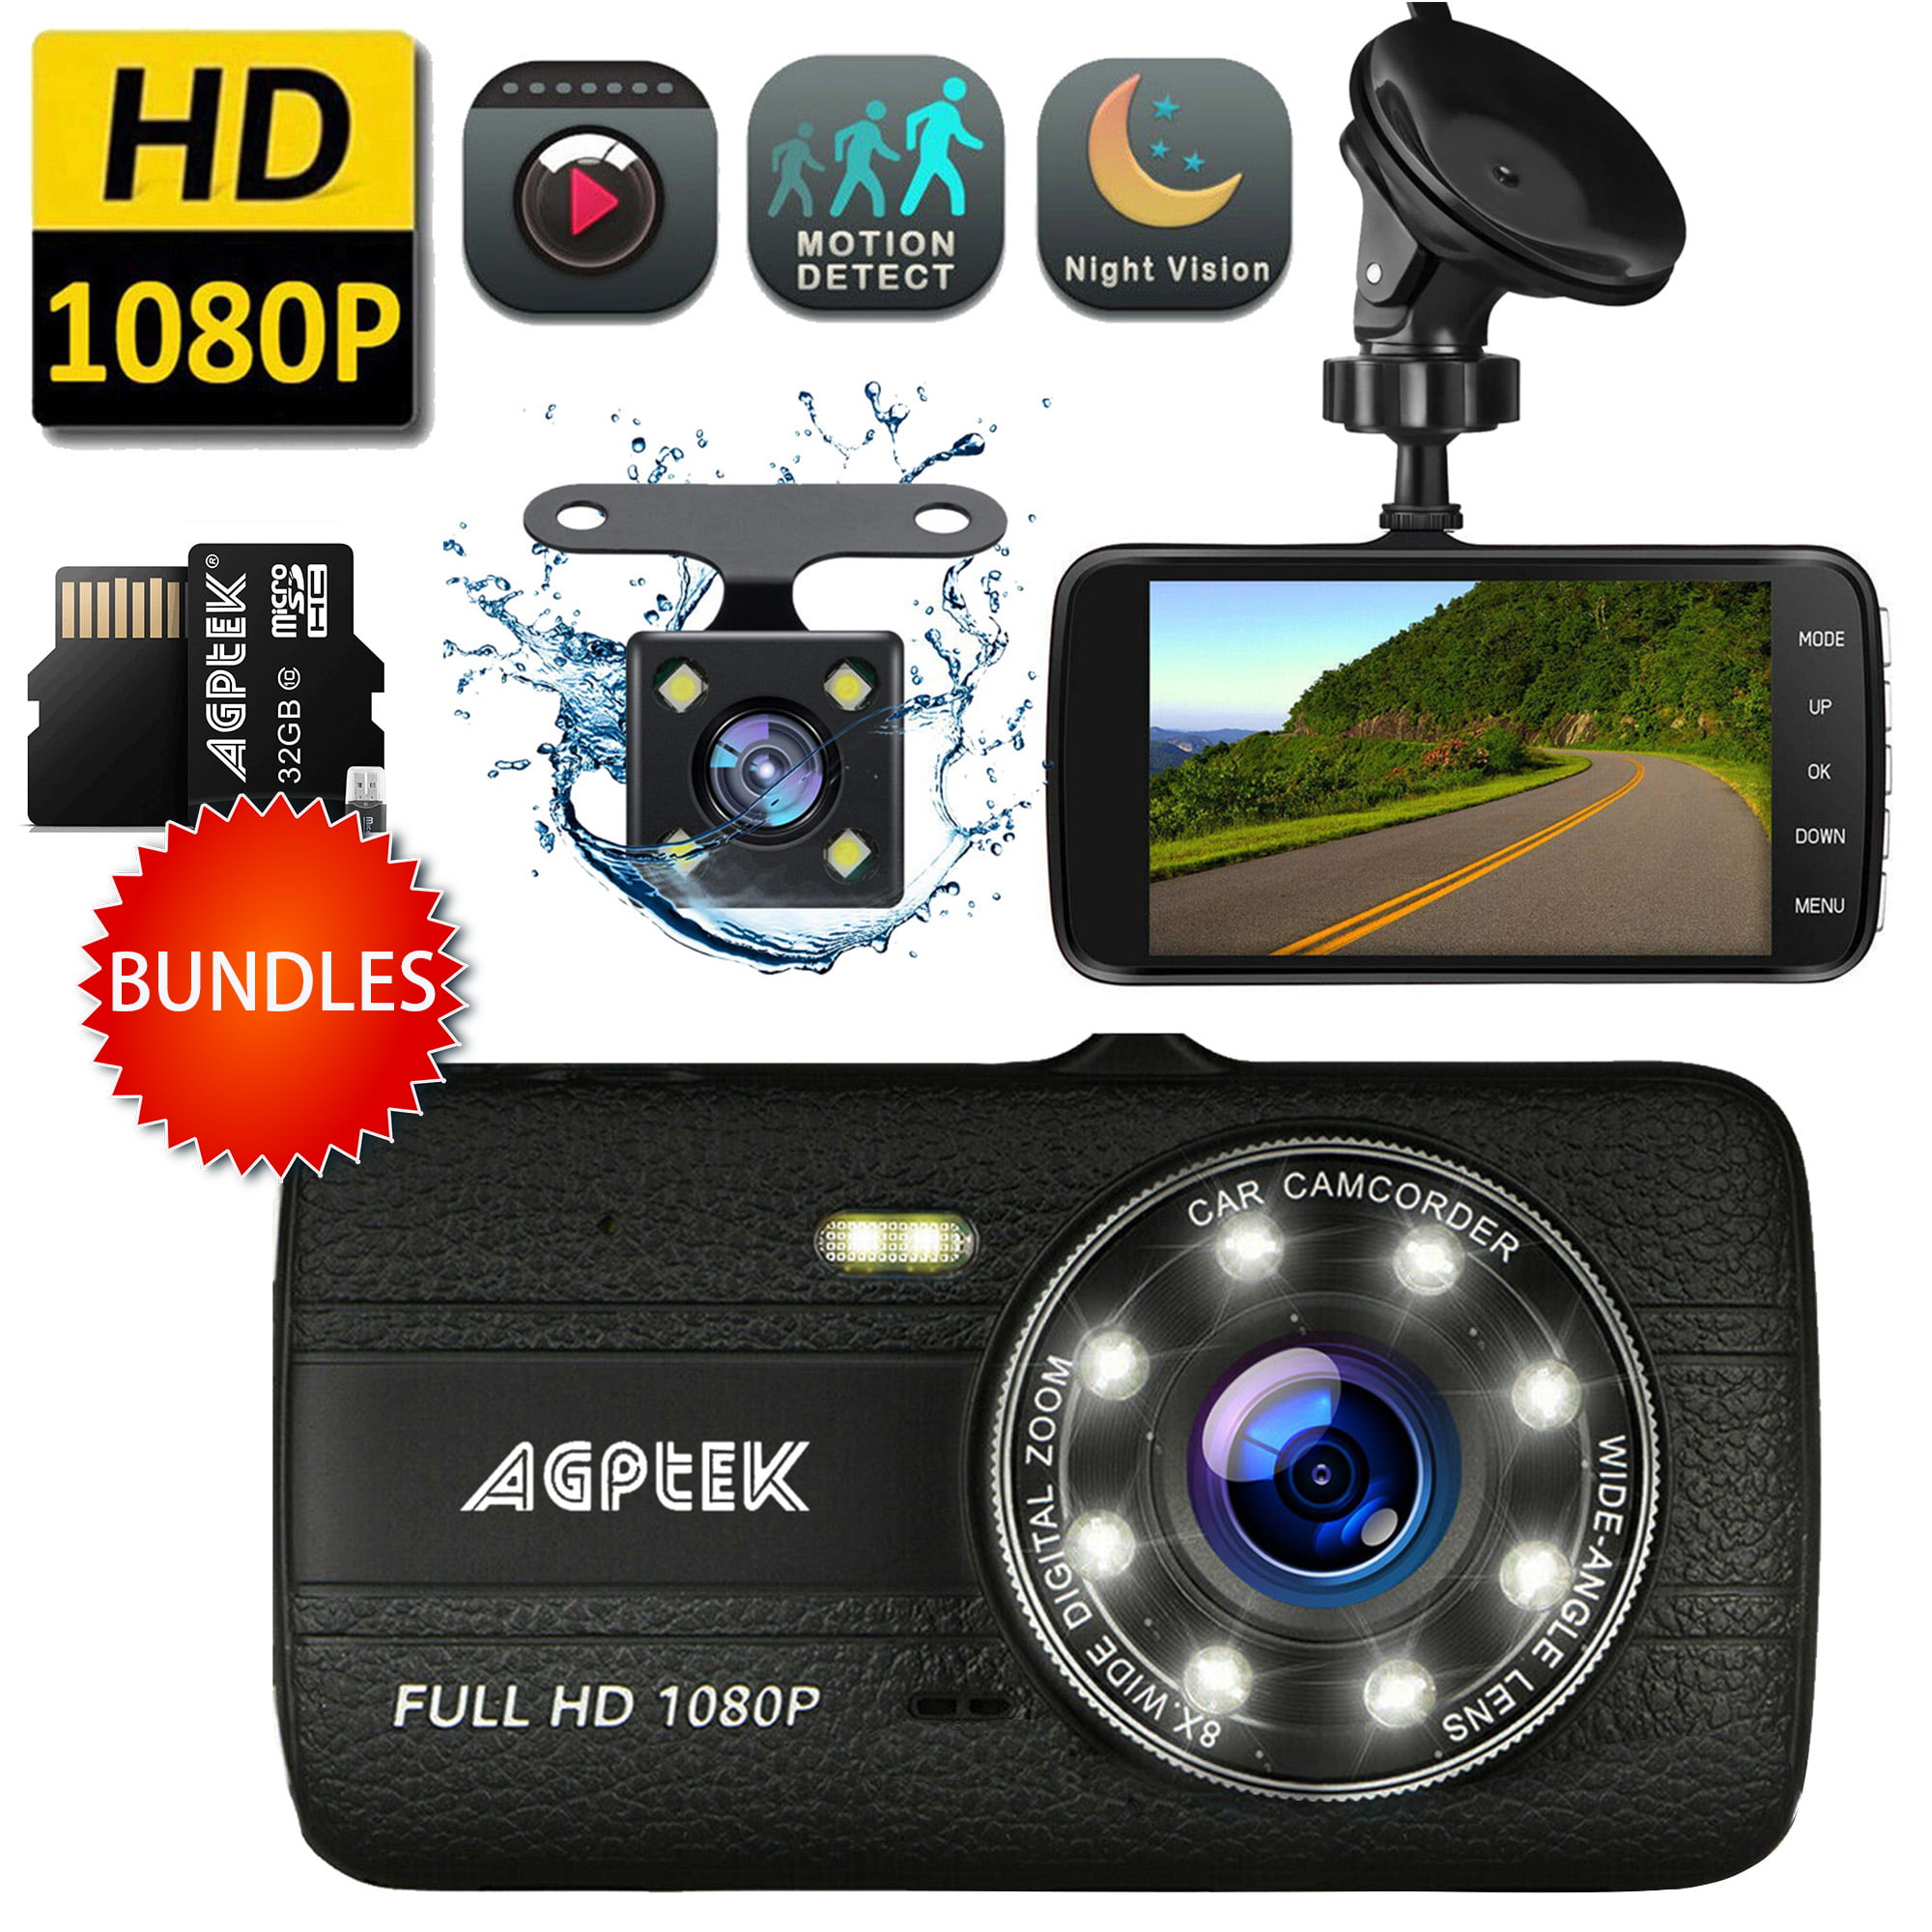 HD 1080P Night Vision Car Video Recorder Camera Vehicle Dash Cam DVR G sensor BK